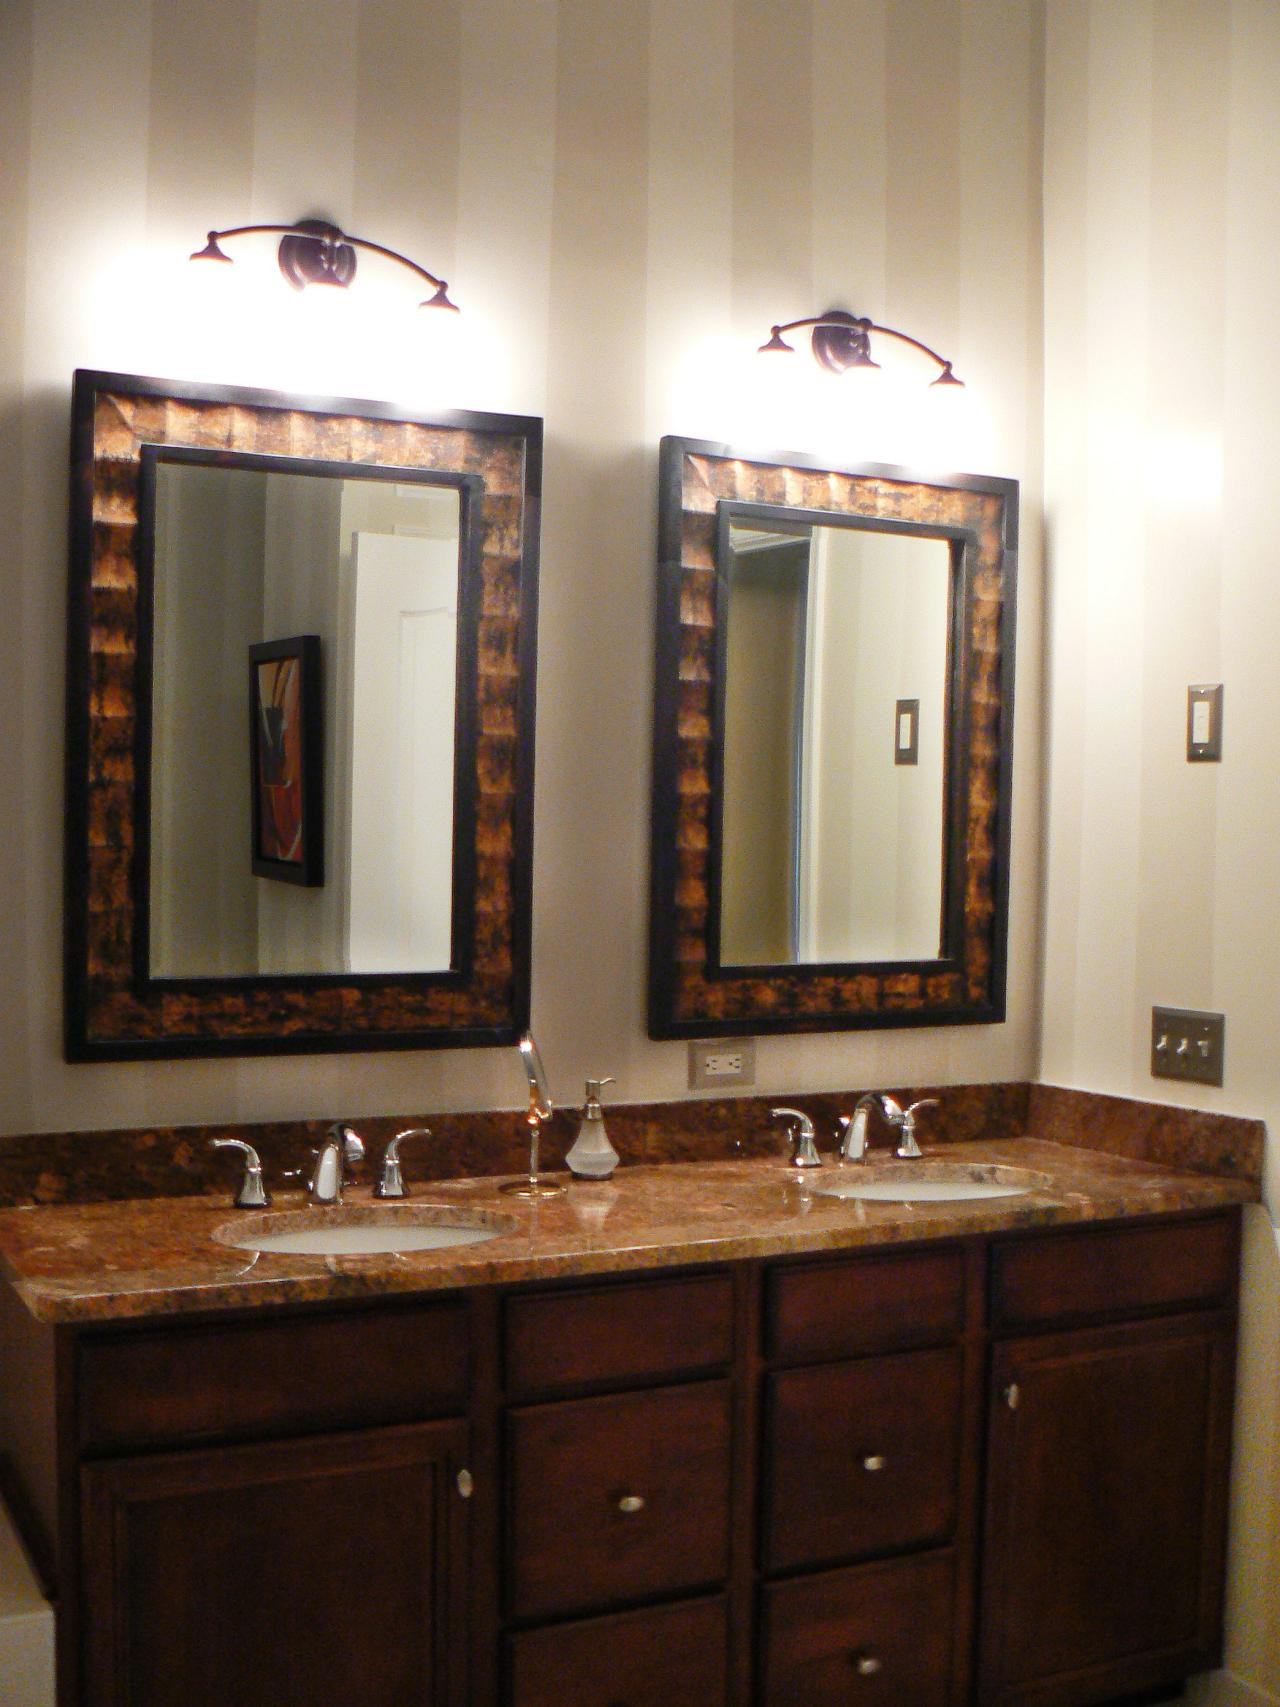 Mirrored Vanities For Bathroom
 How to Choose Bathroom Vanity Mirrors Dap fice